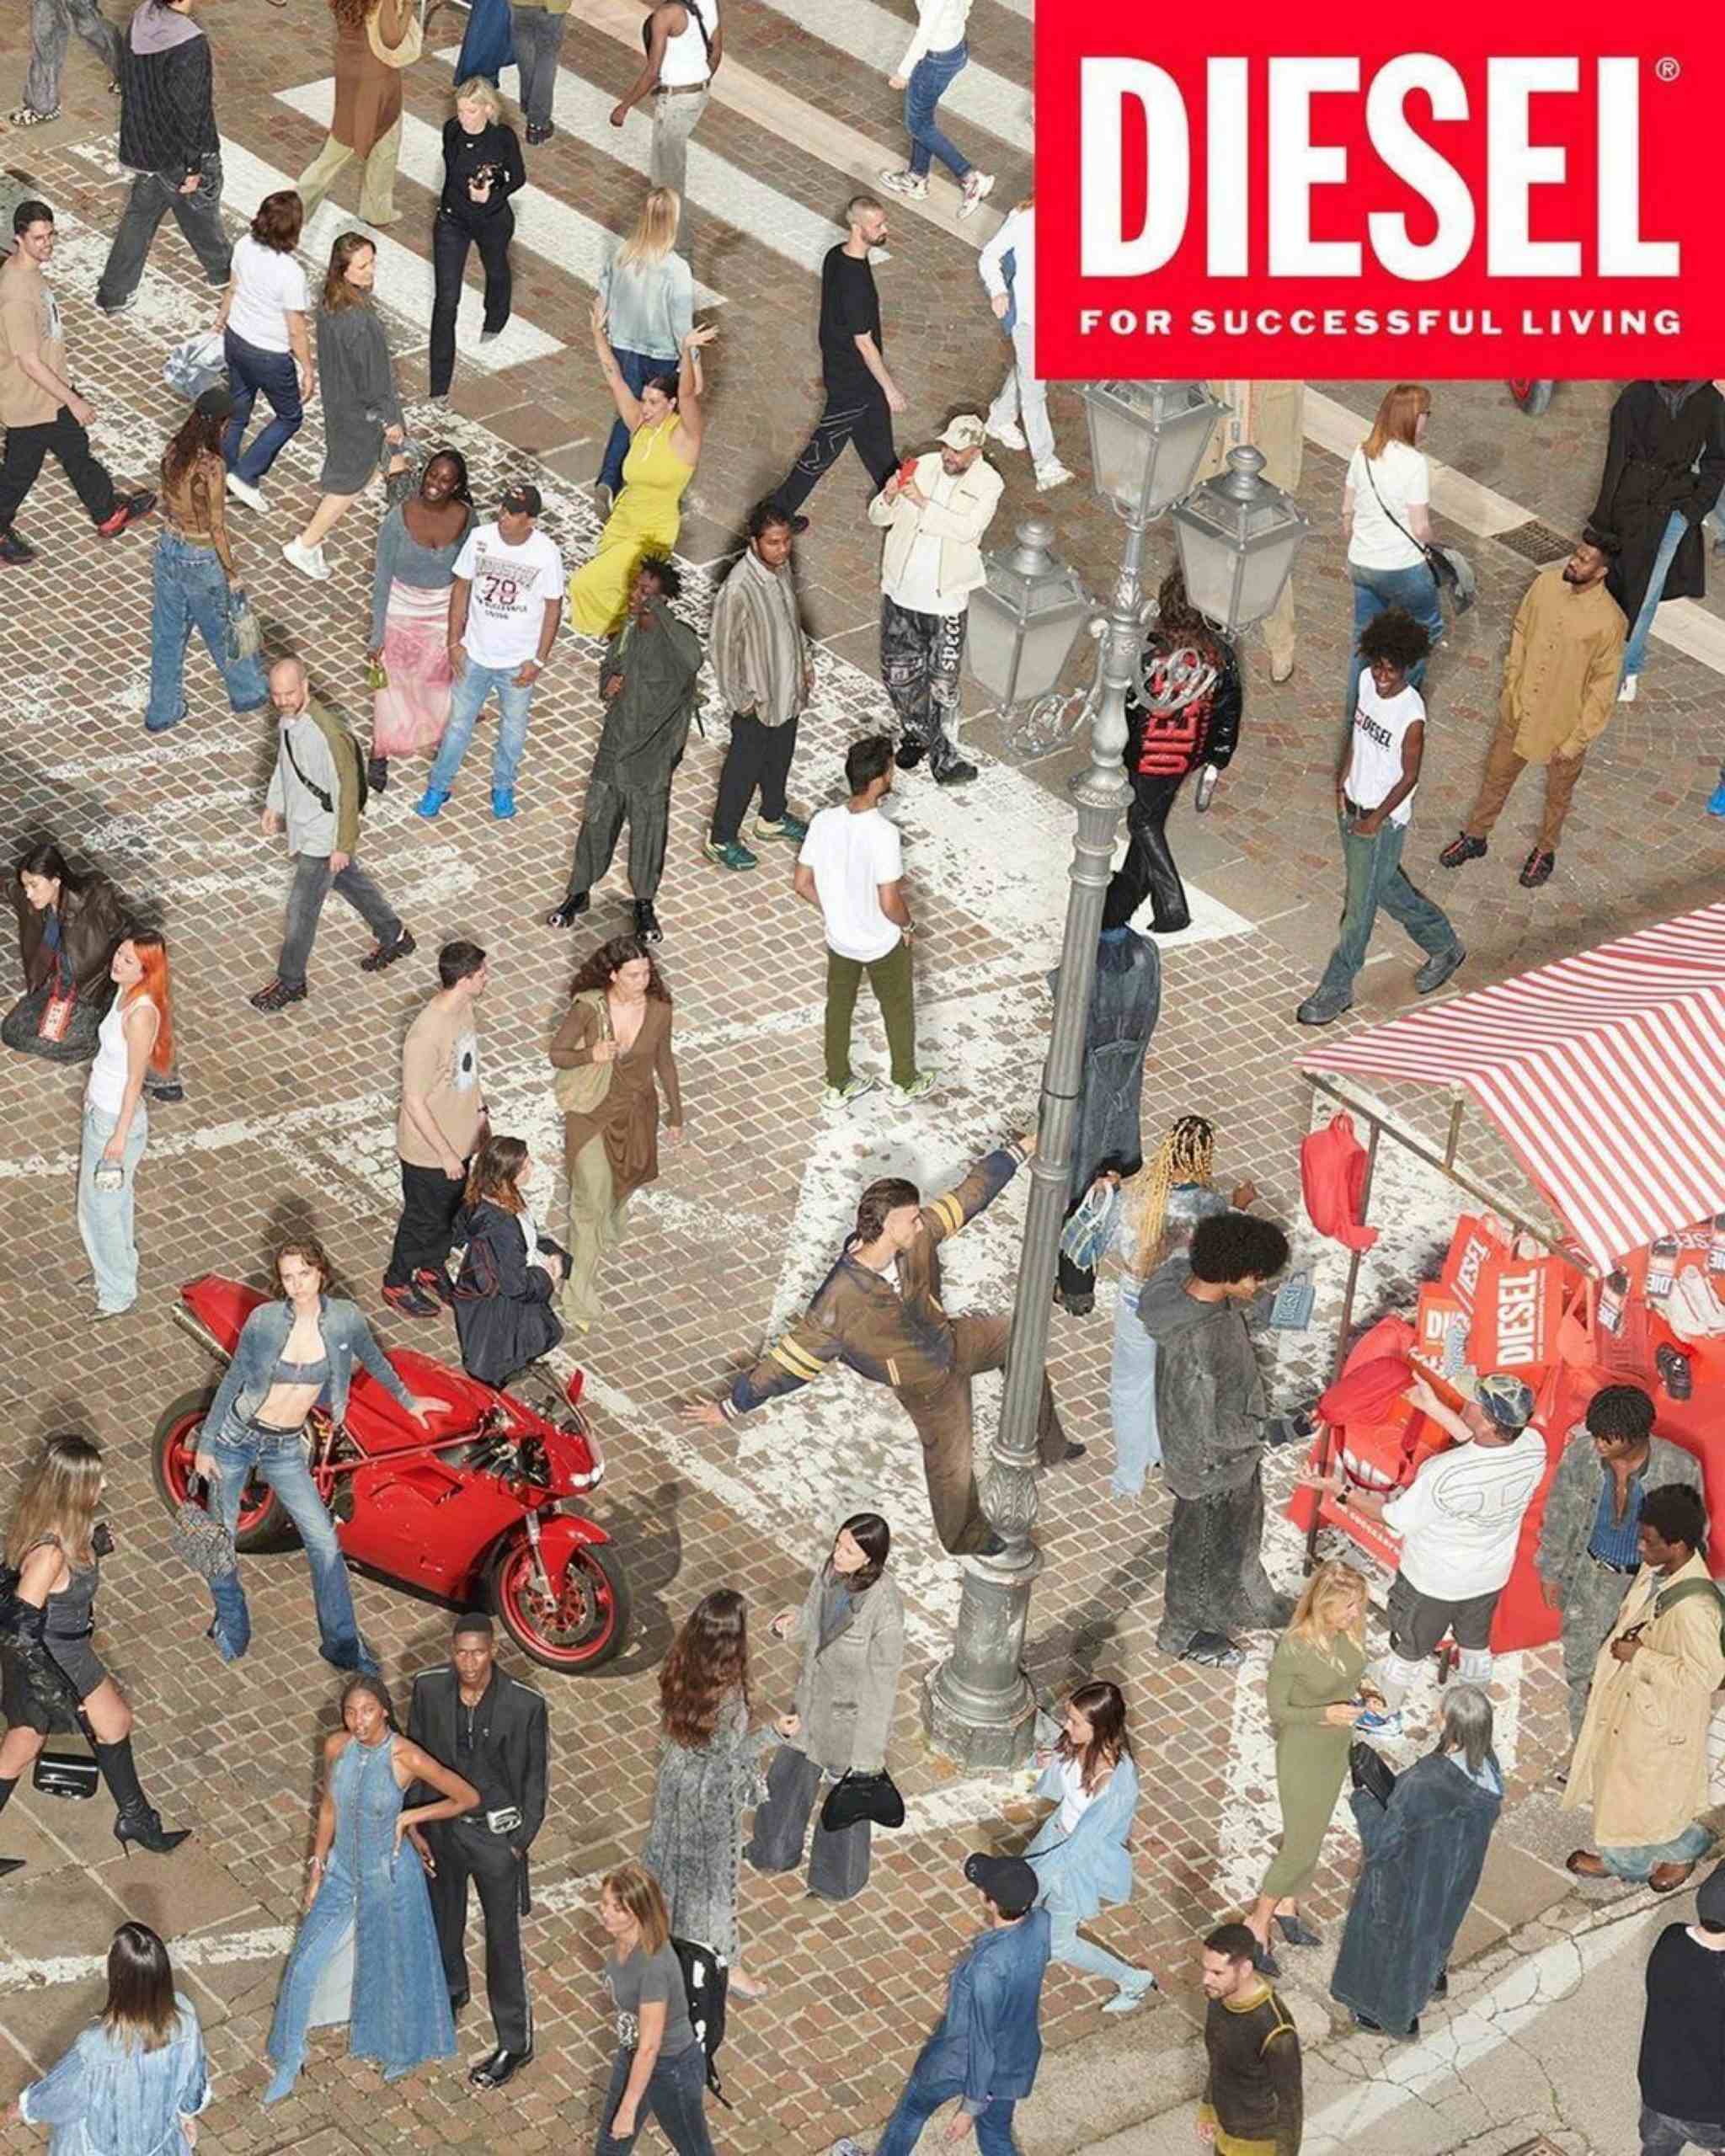 DIESEL - Find The D - FW '23 Campaign
Photographer: Johnny Dufort
Stylist: Ursina Gysi
Location: Breganze - IT